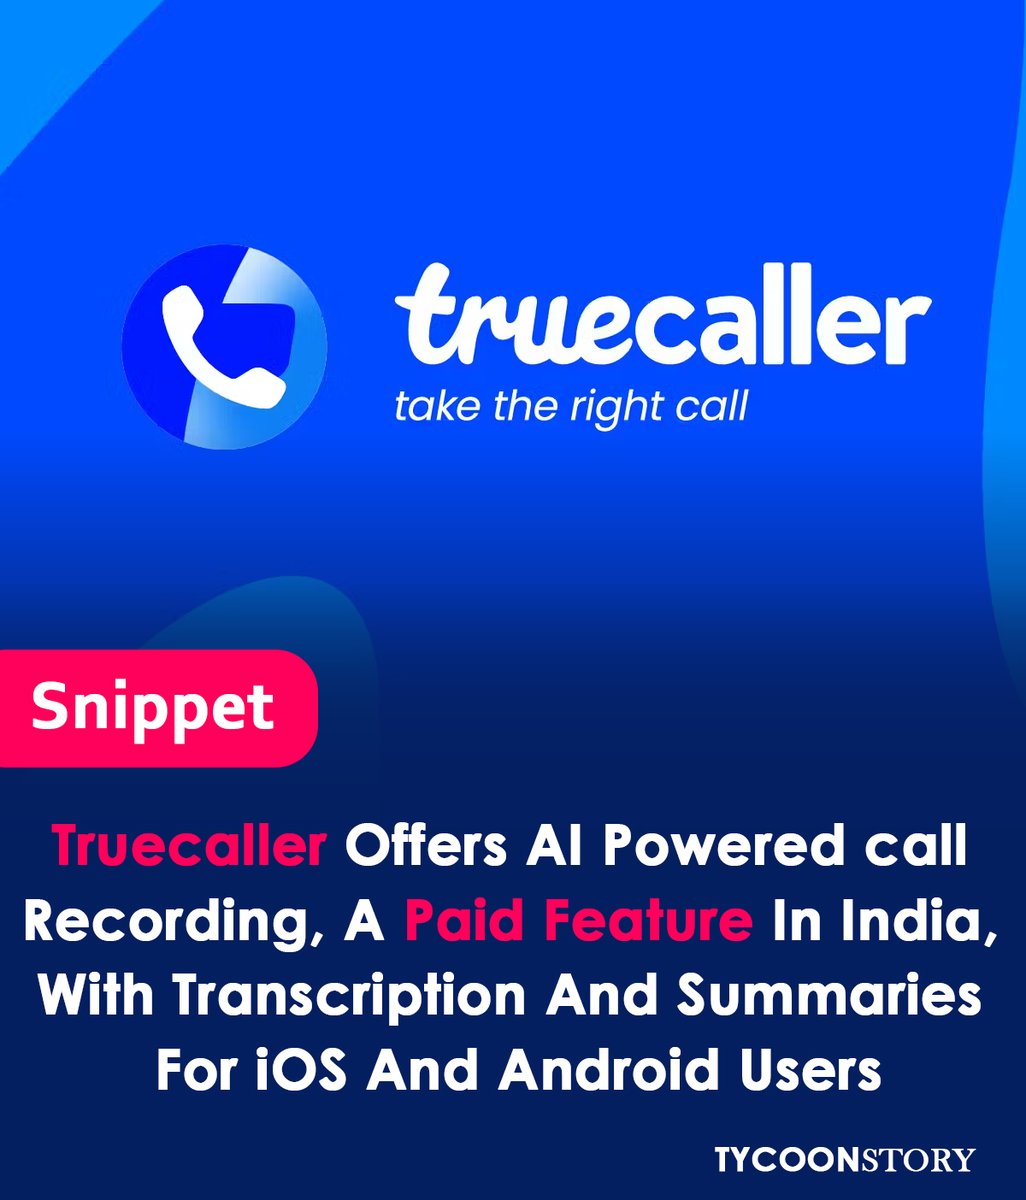 Truecaller launches AI call recording in India
#Truecaller #CallRecording #AI #India #Transcription #CallSummary #Premium #Productivity #Communication #AIInnovation #UserControl @truecaller_in